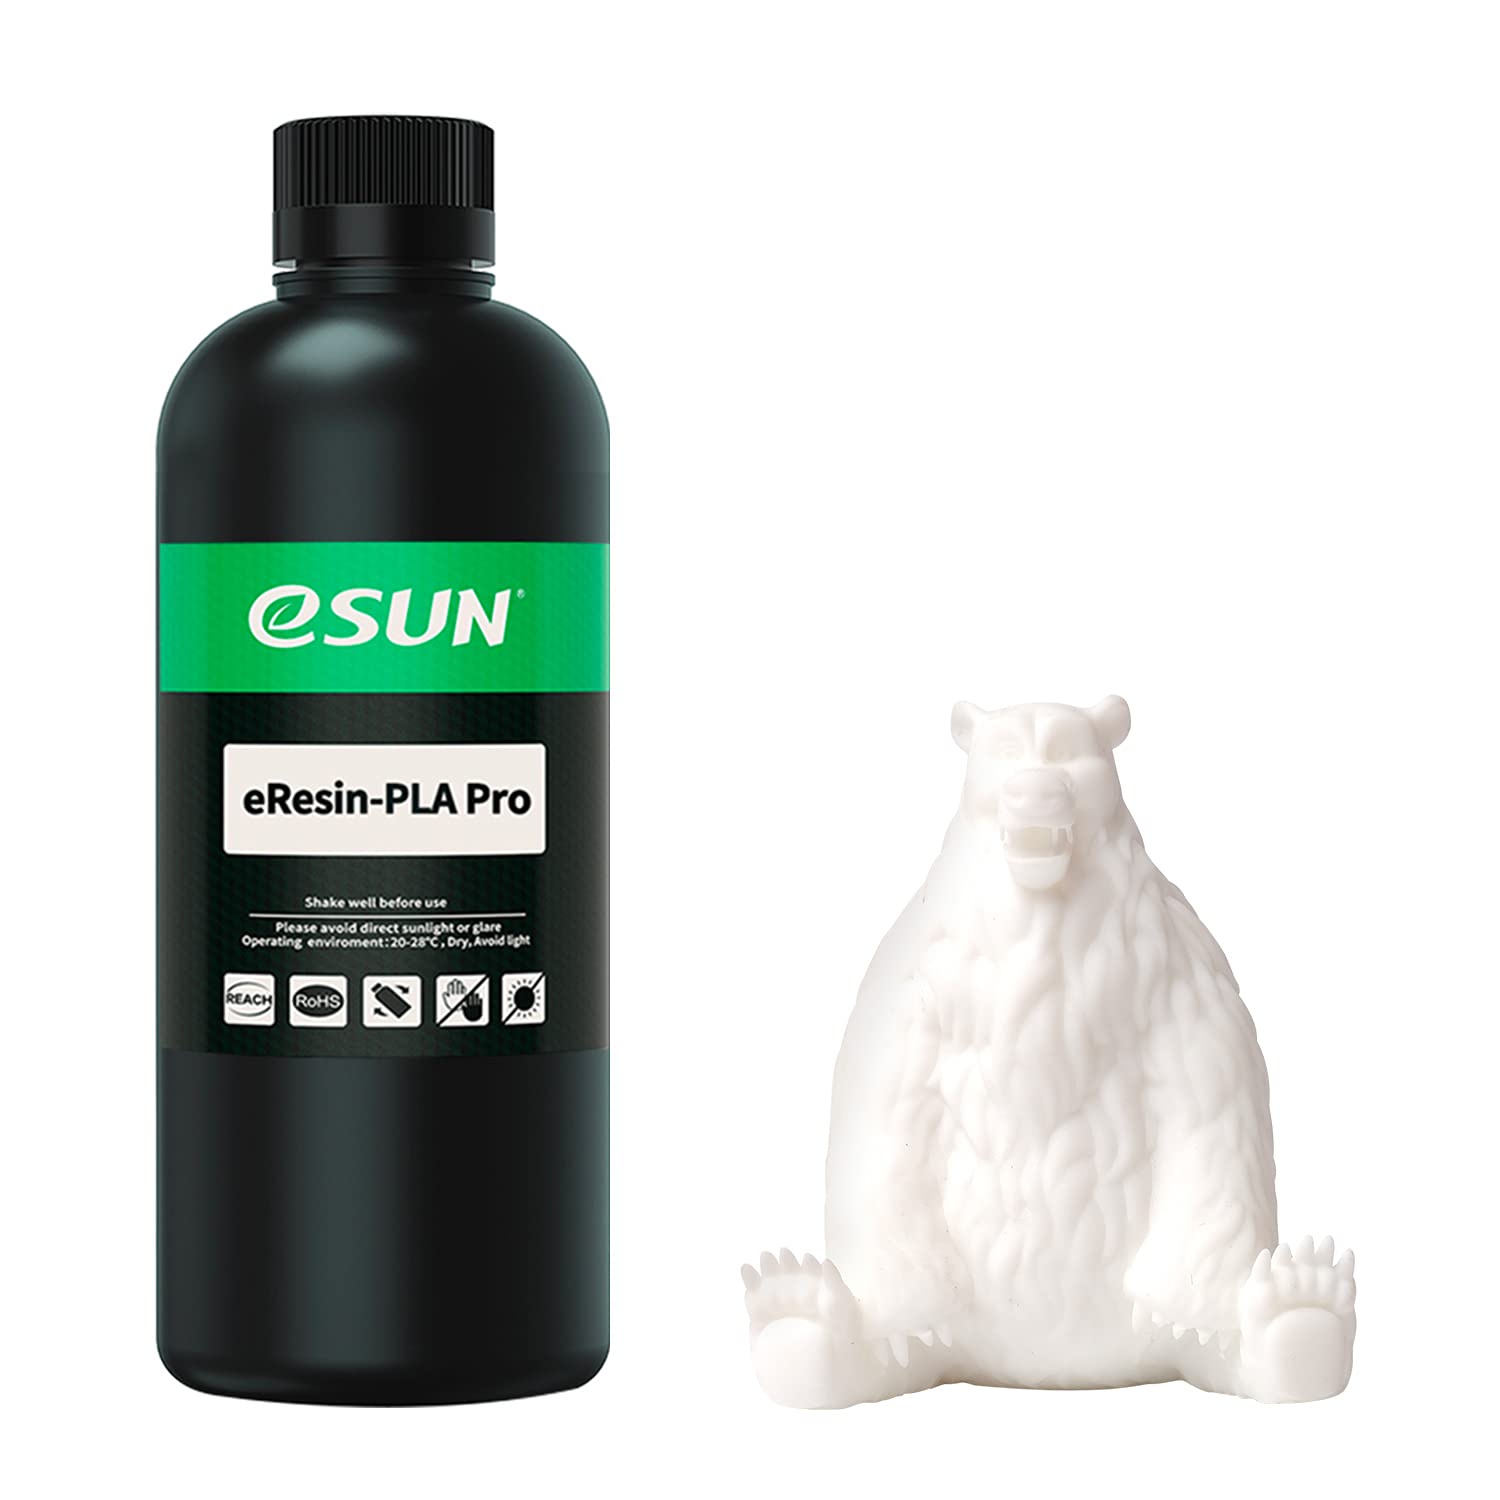 eSUN Plant Based Pro UV Resin, 405nm LCD UV Curing Photopolymer High Precision Low Odour Liquid Resin